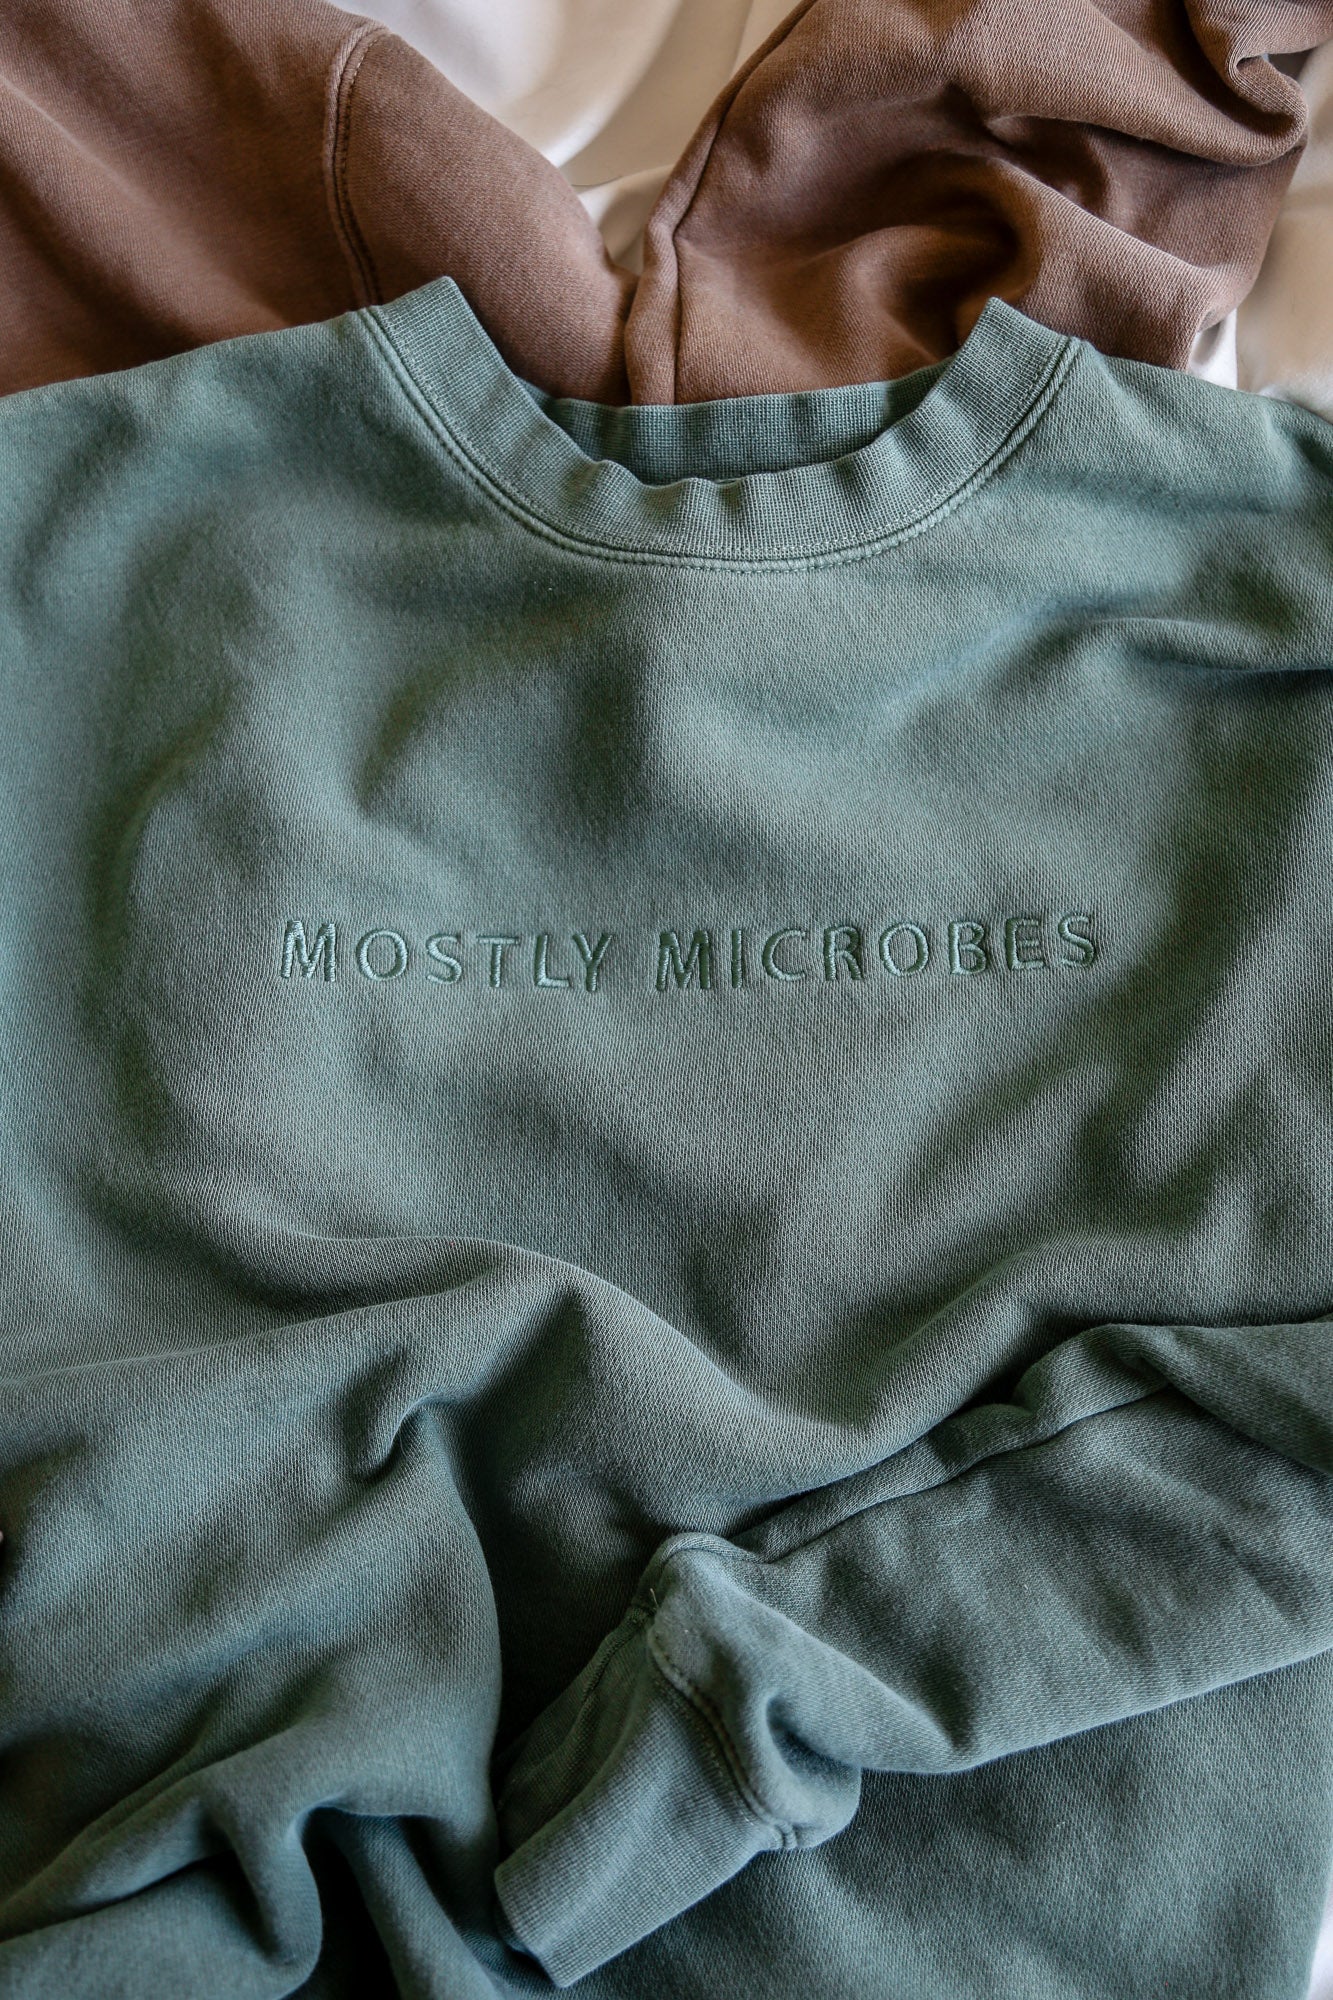 Mostly Microbes Sweatshirt